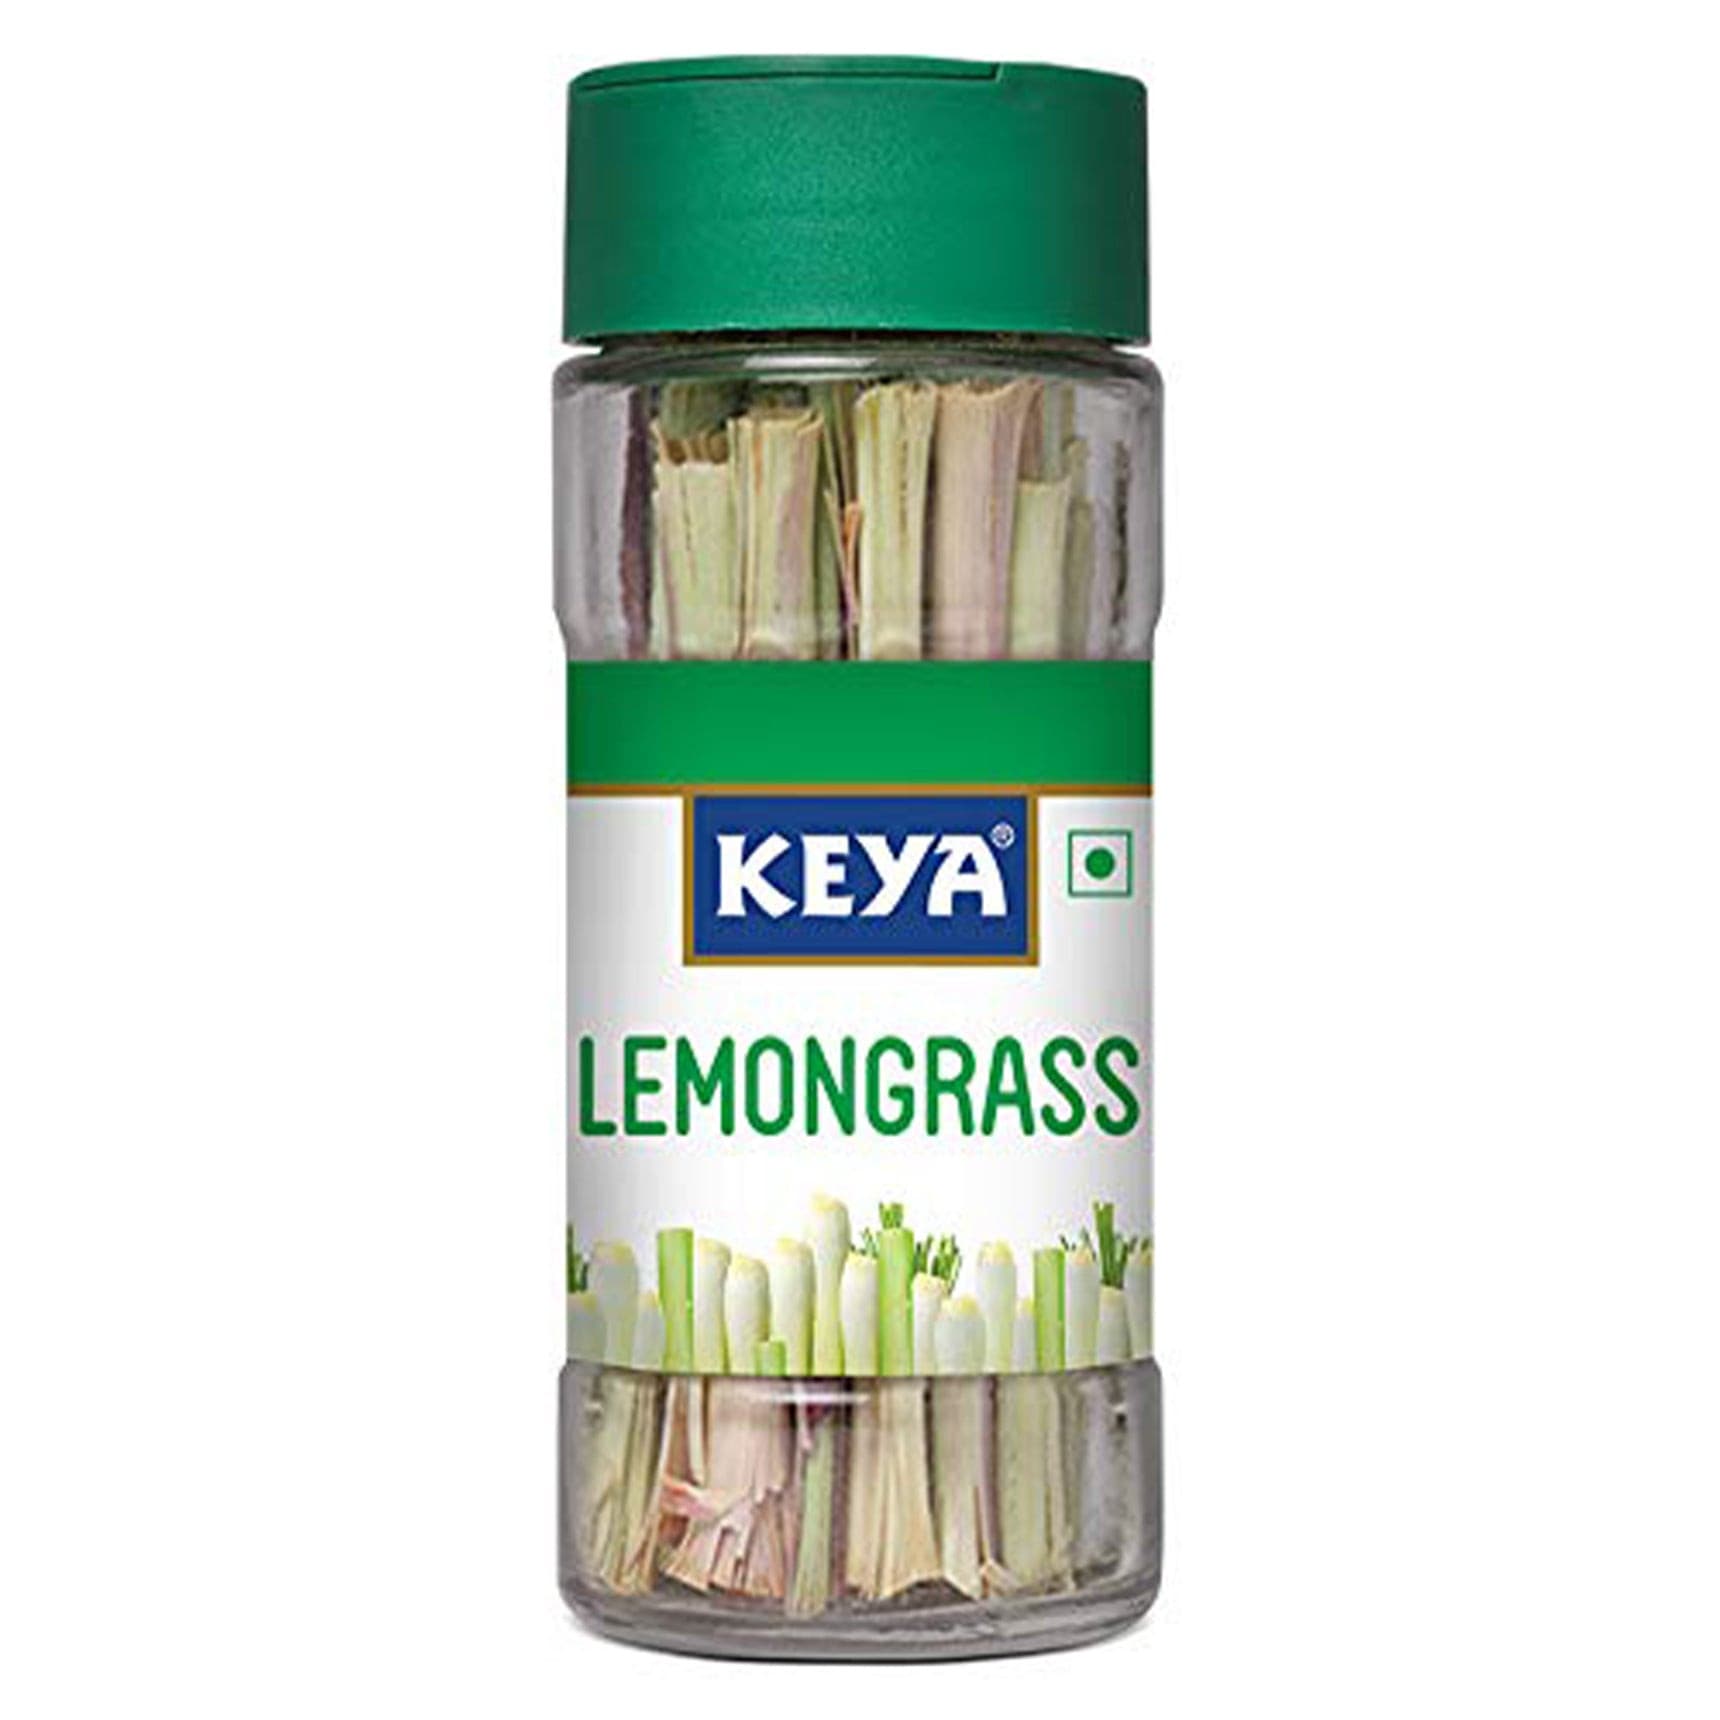 Keya Lemongrass (7047388594363)